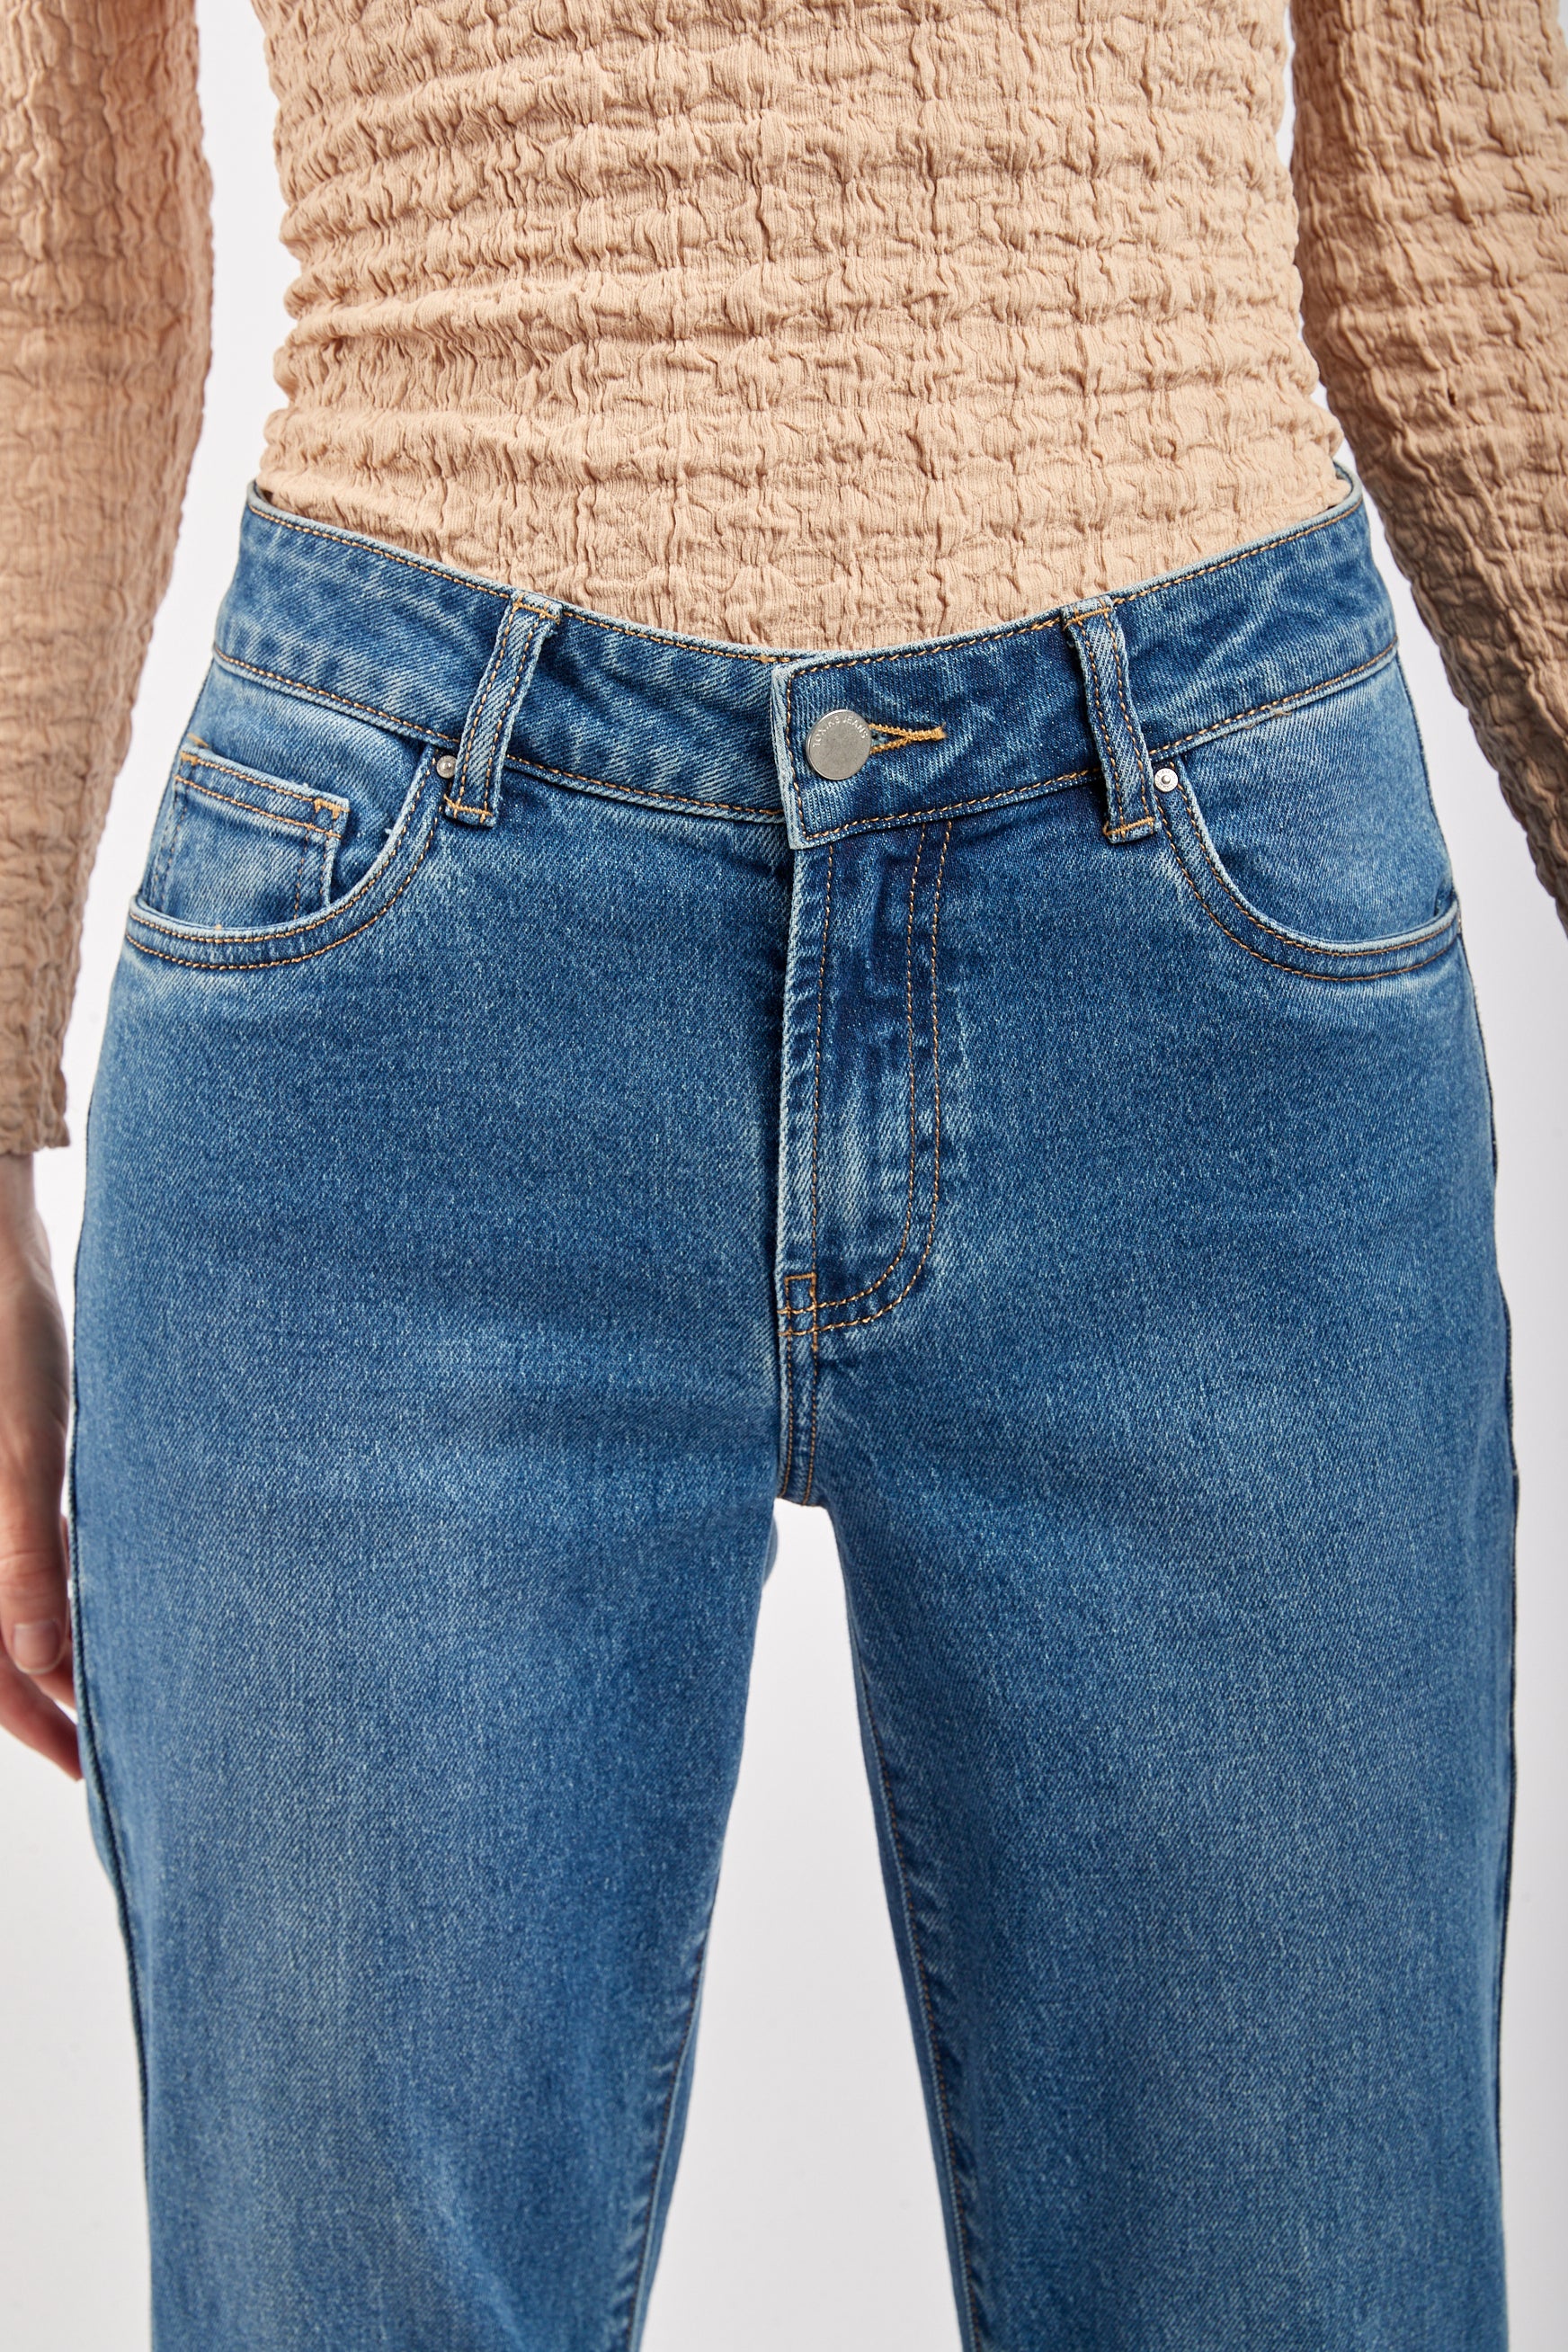 Jeans detail knee pocket - joke